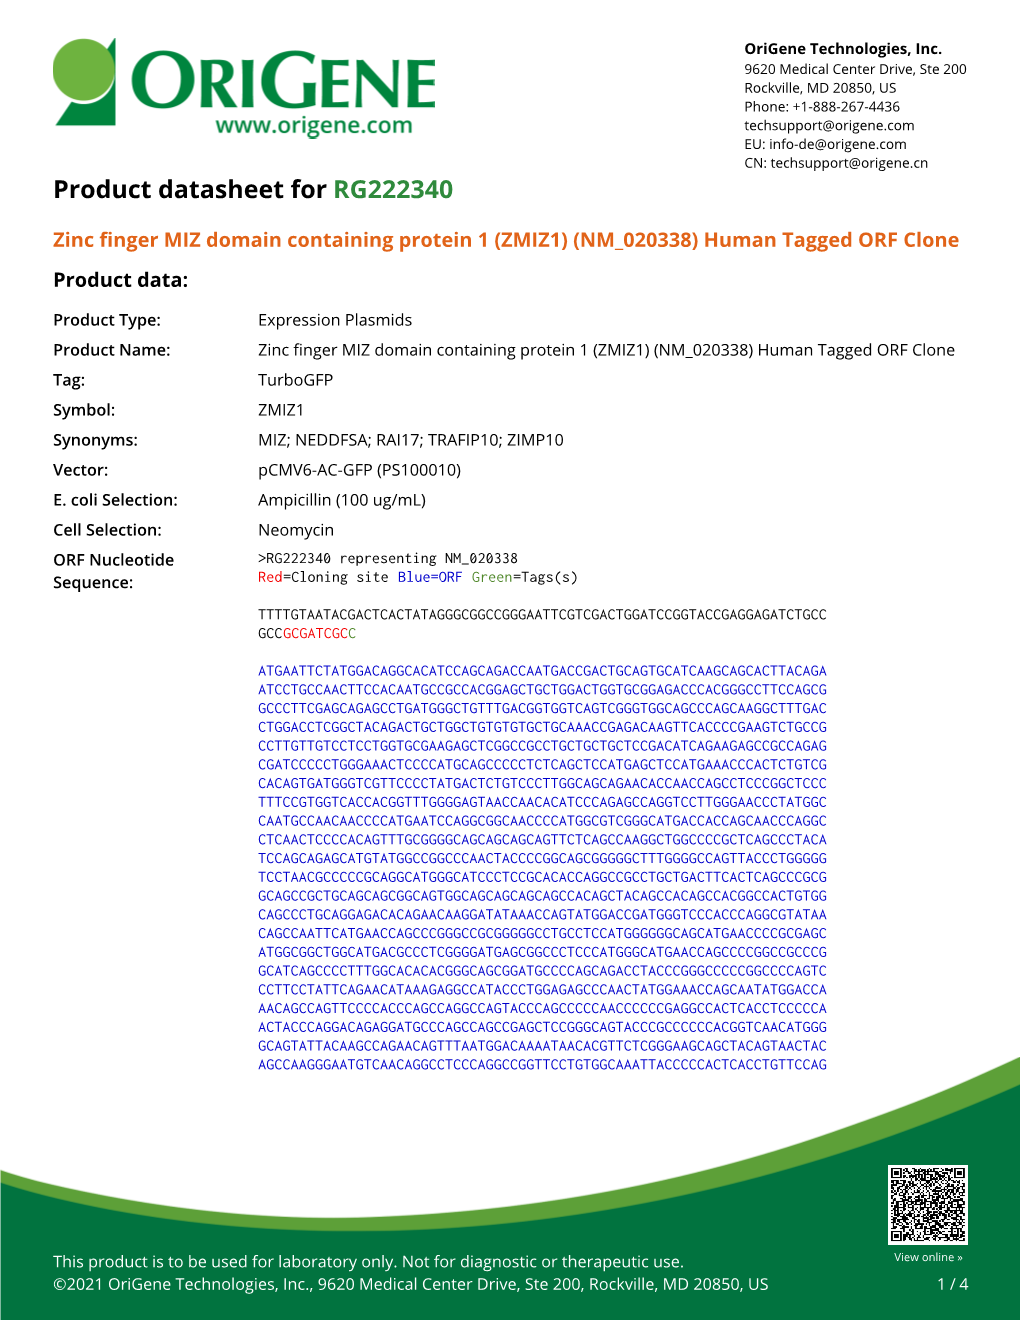 Zinc Finger MIZ Domain Containing Protein 1 (ZMIZ1) (NM 020338) Human Tagged ORF Clone Product Data